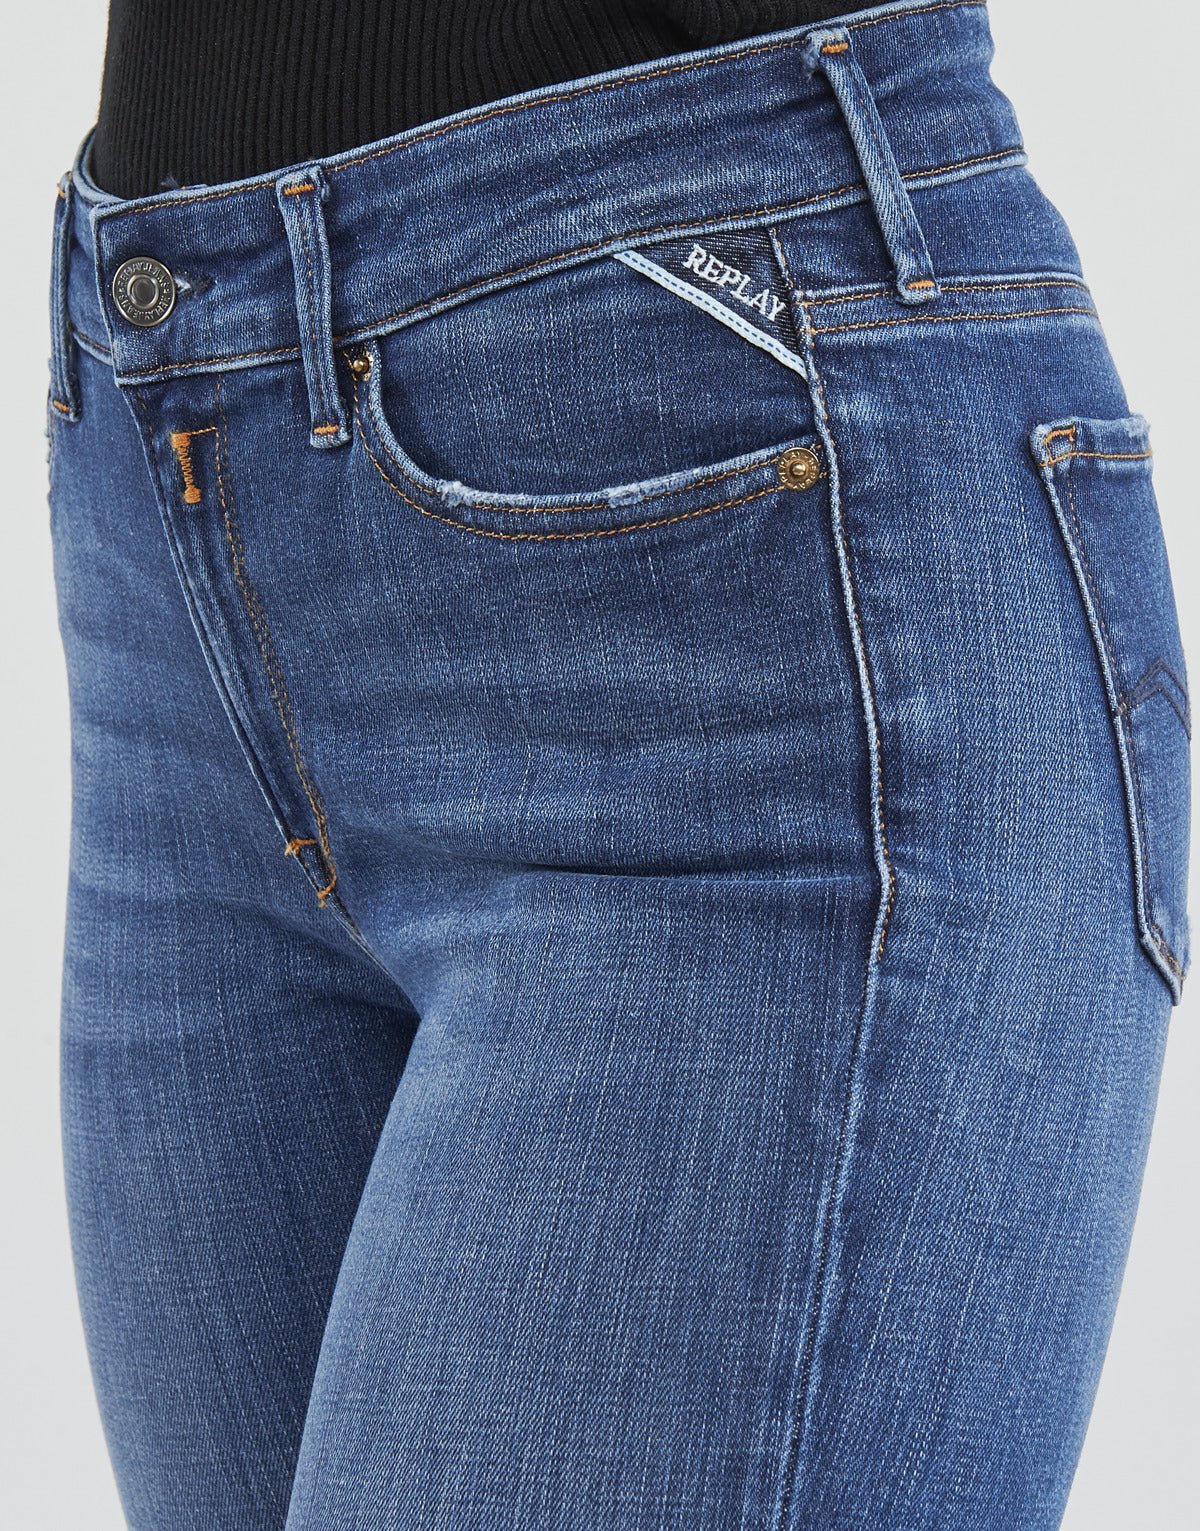 Replay Ladies WHW689 Blue / Dark High Waisted Skinny Jeans